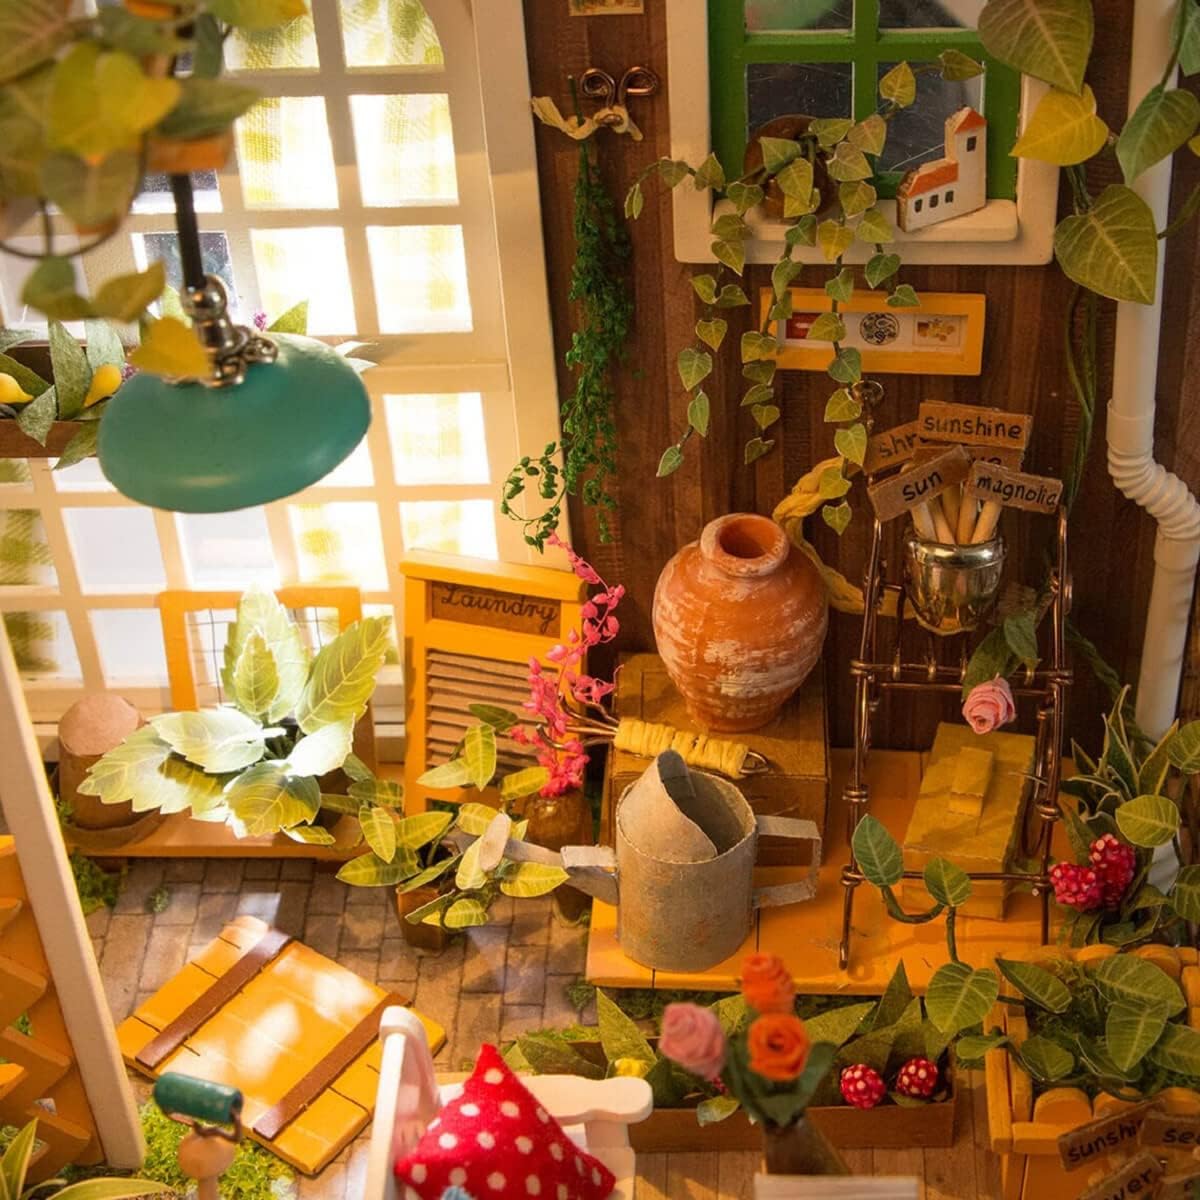 Miller's Garden DIY Miniature House Kit - DIYative™